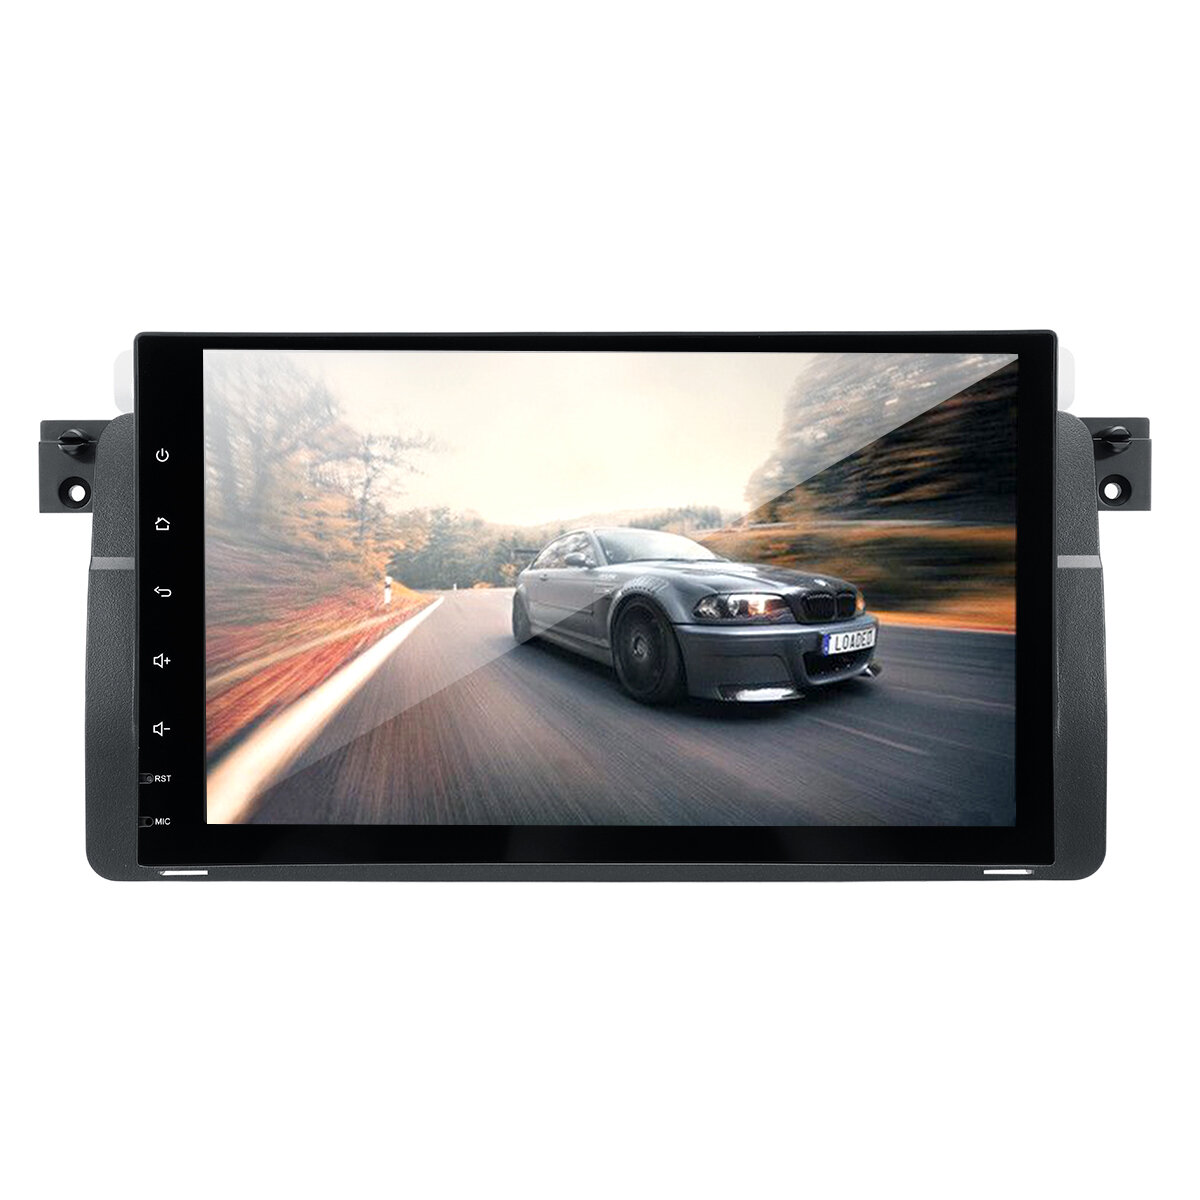 

9 дюймов 2DIN для Android 8,0 Авто стерео Радио 1 + 16G WiFi GPS Sat Navigation OBD DAB с 4LED камера для BMW E46 3 сери